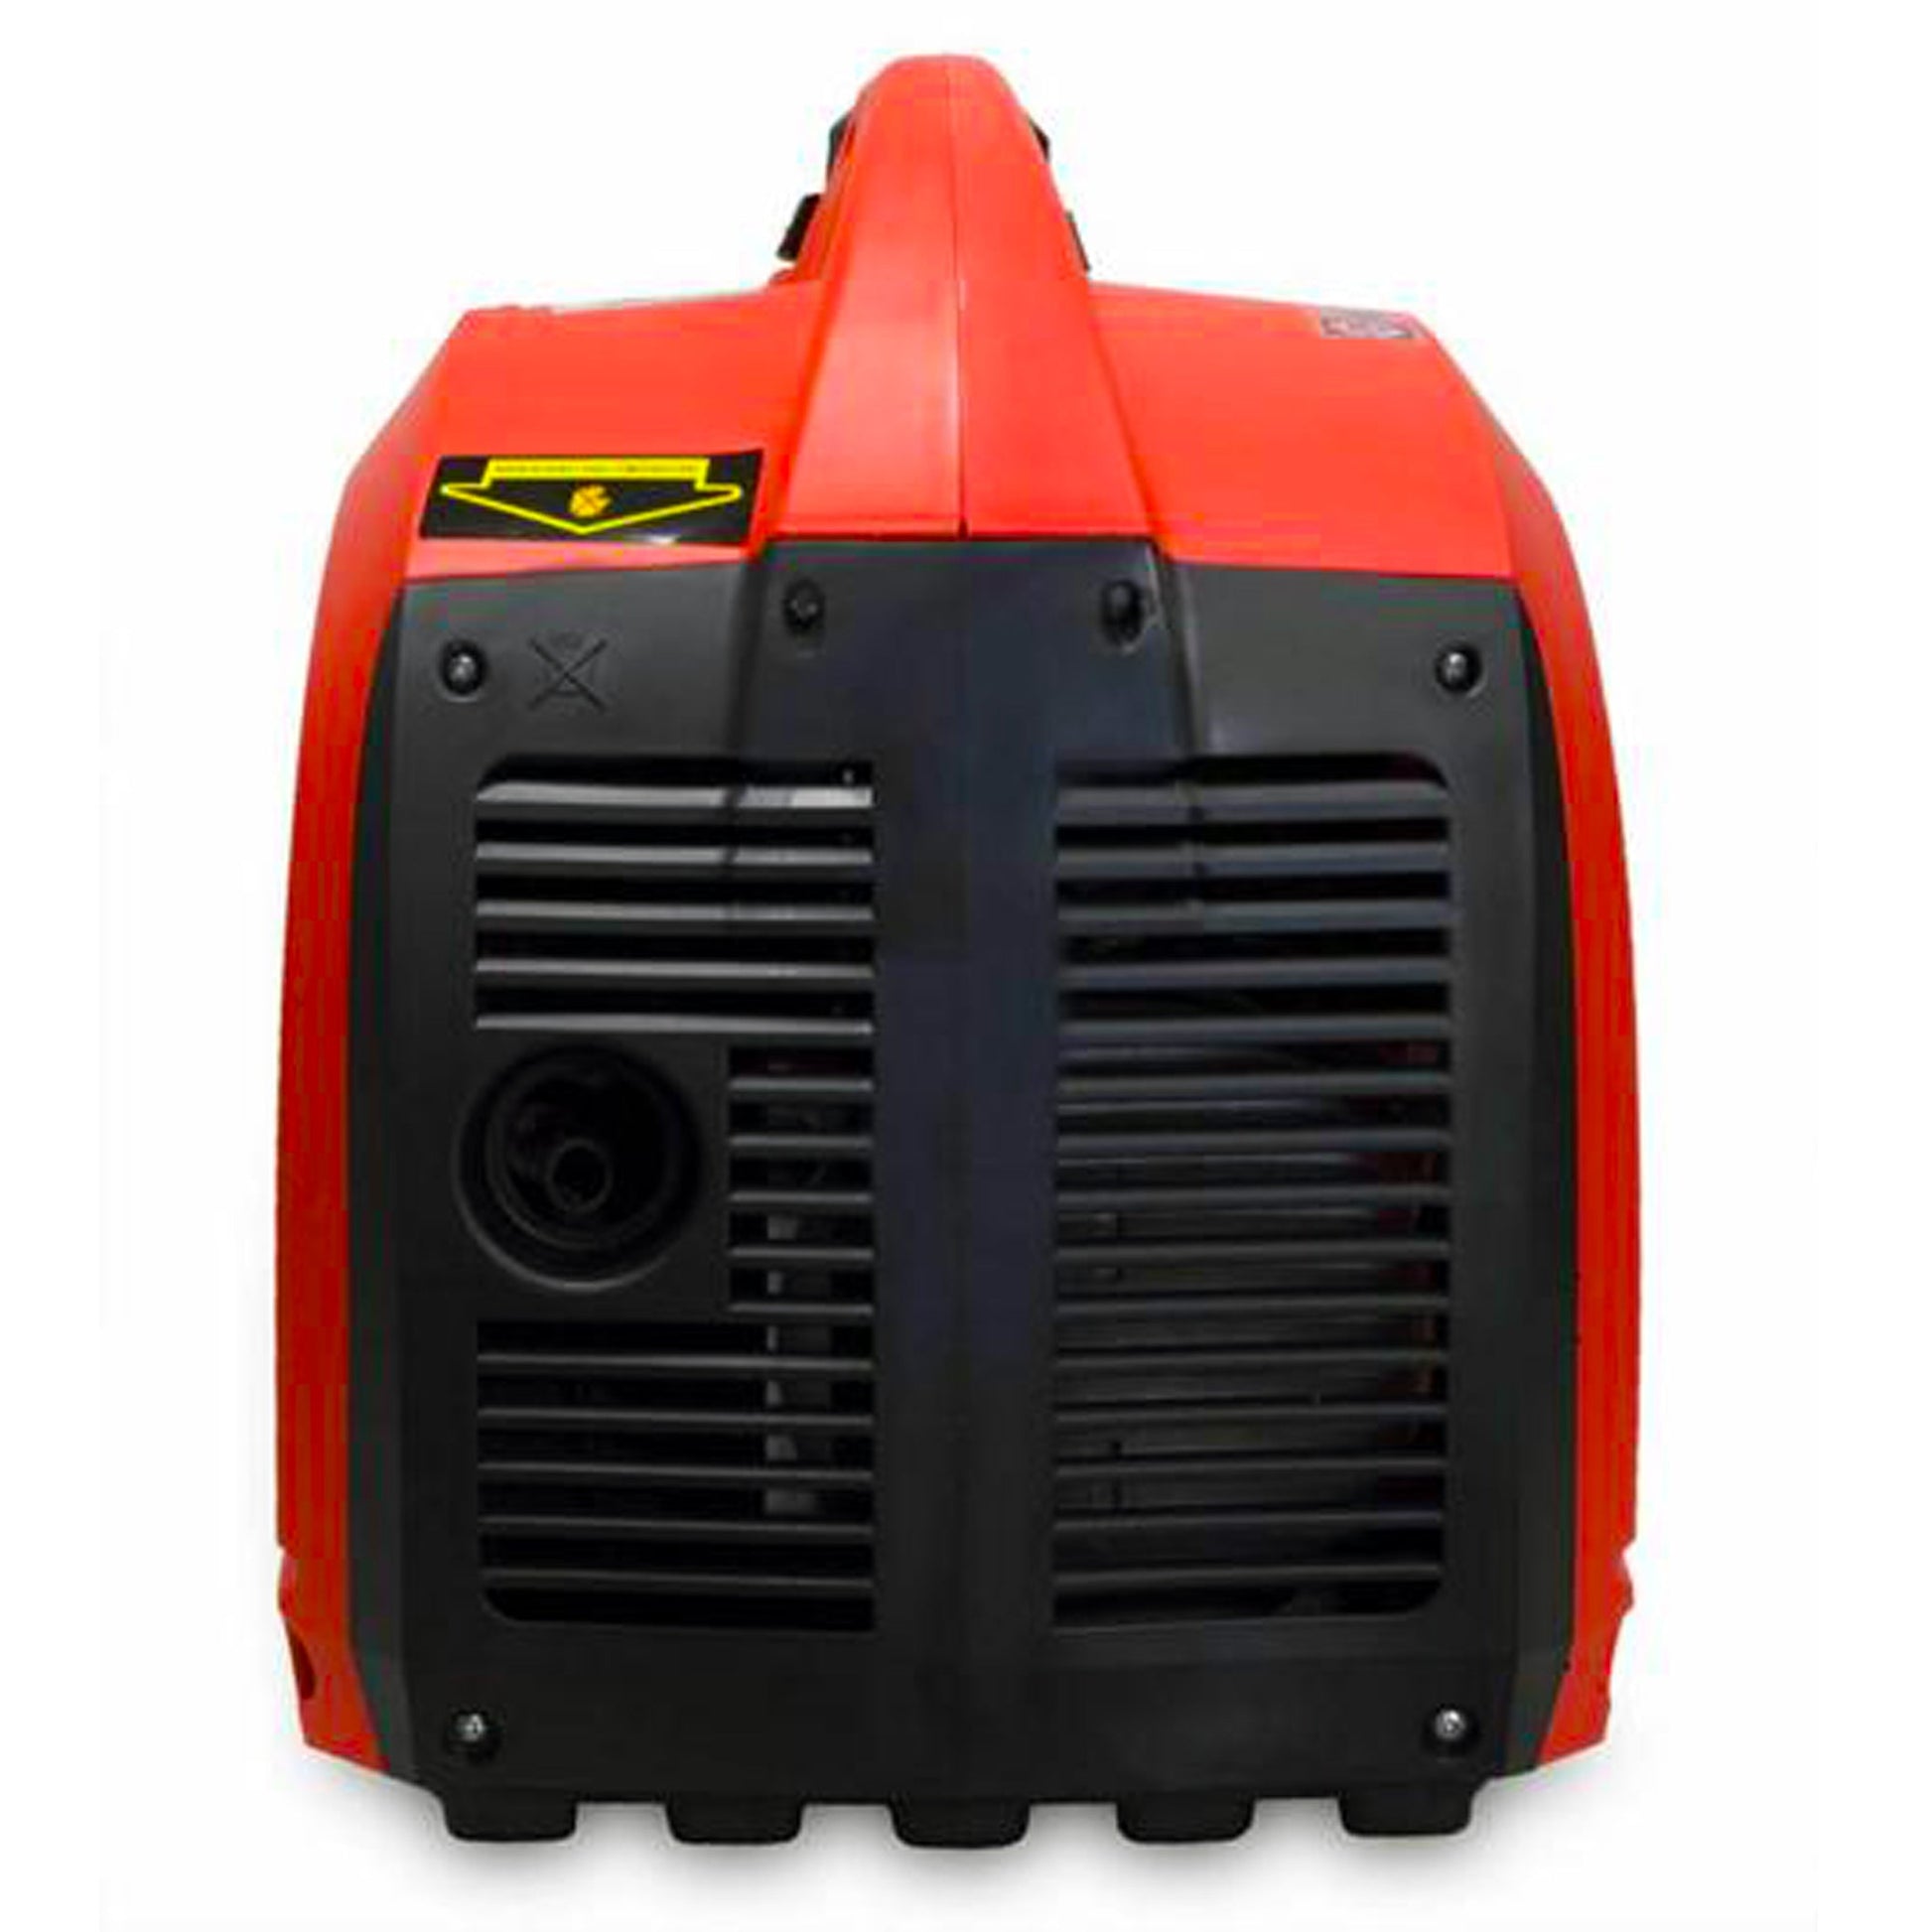 Widmann WM2500W: Benzine aangedreven draagbare inverter generator - 650W - Bivakshop